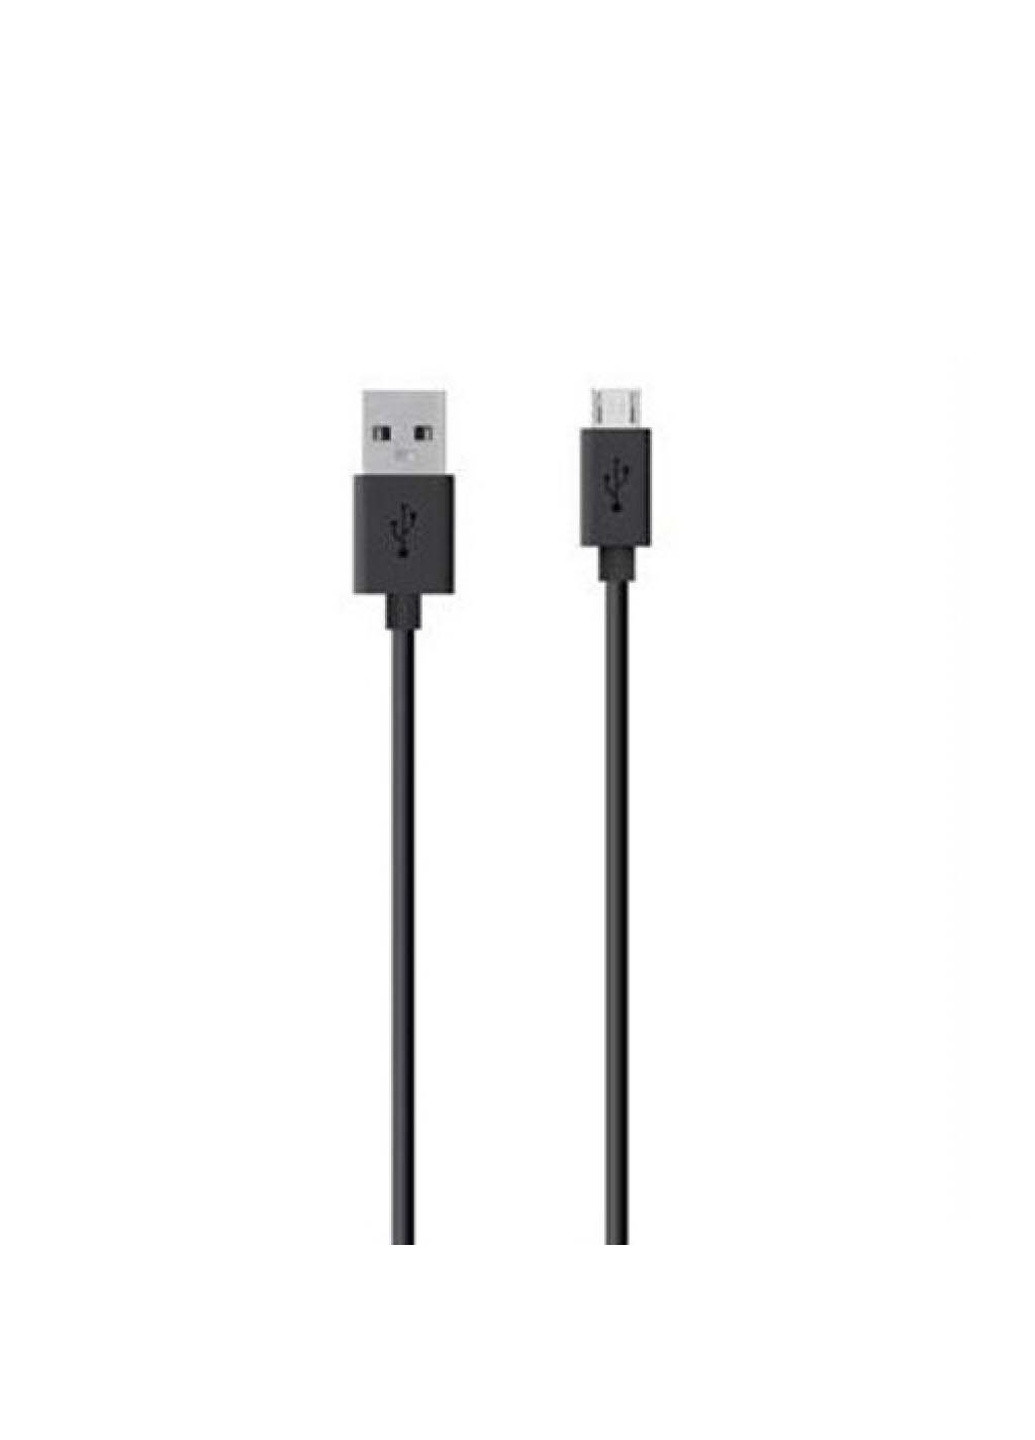 Дата кабель USB 2.0 (AM / microB) MIXIT 2м, Black (F2CU012qbt2MBLK) Belkin usb 2.0 (am/microb) mixit 2м, black (239381456)